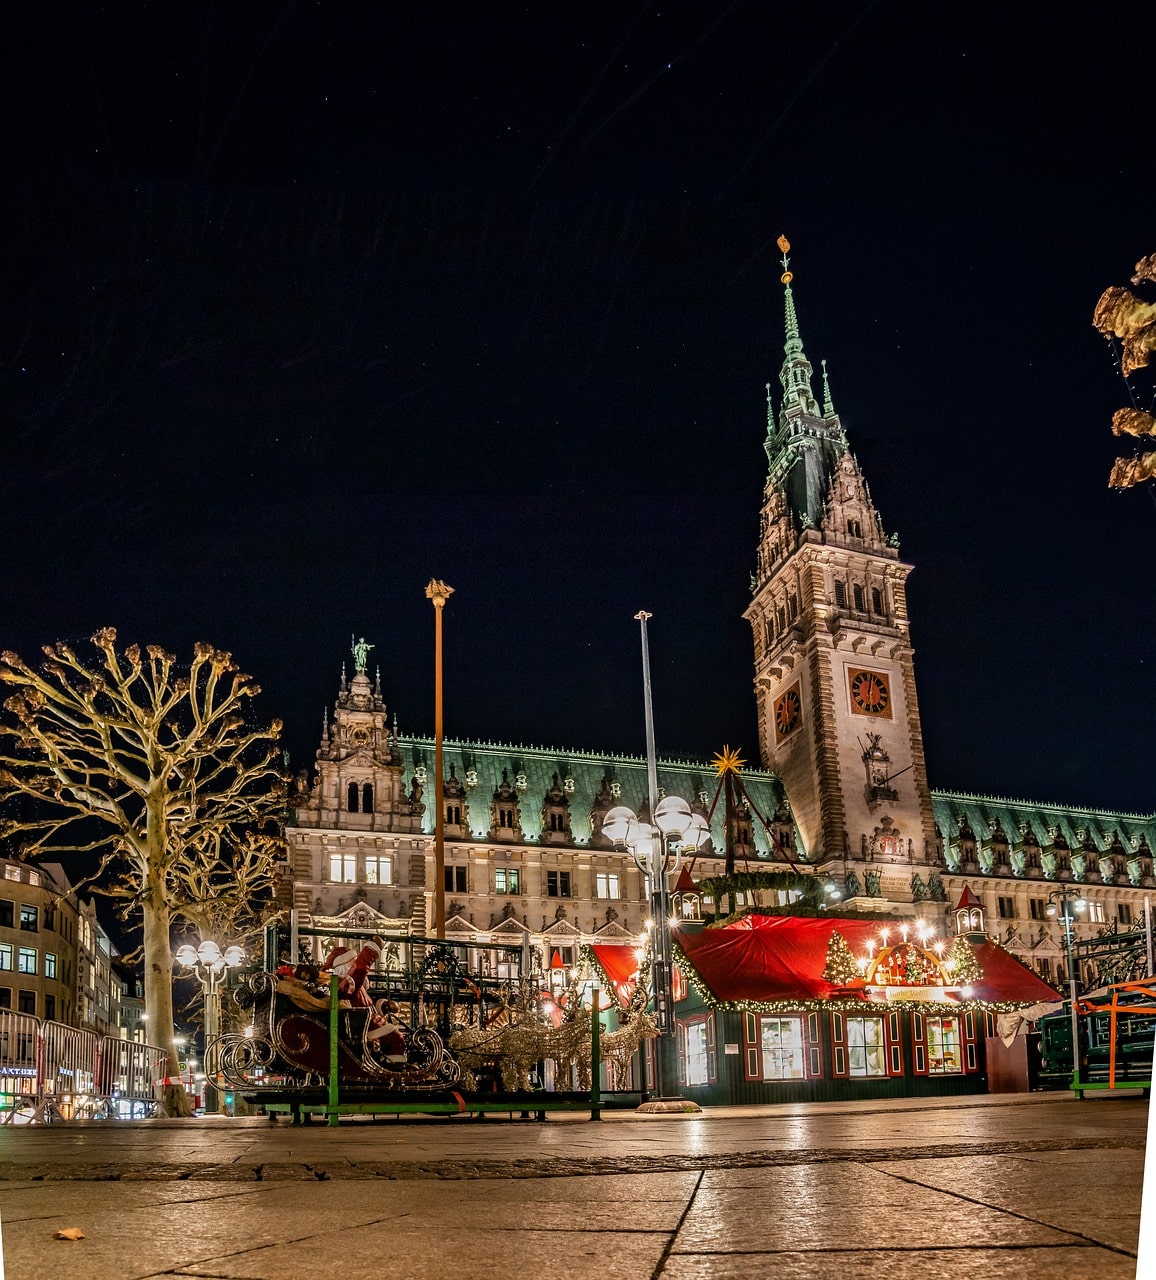 Hamburg Christmas market